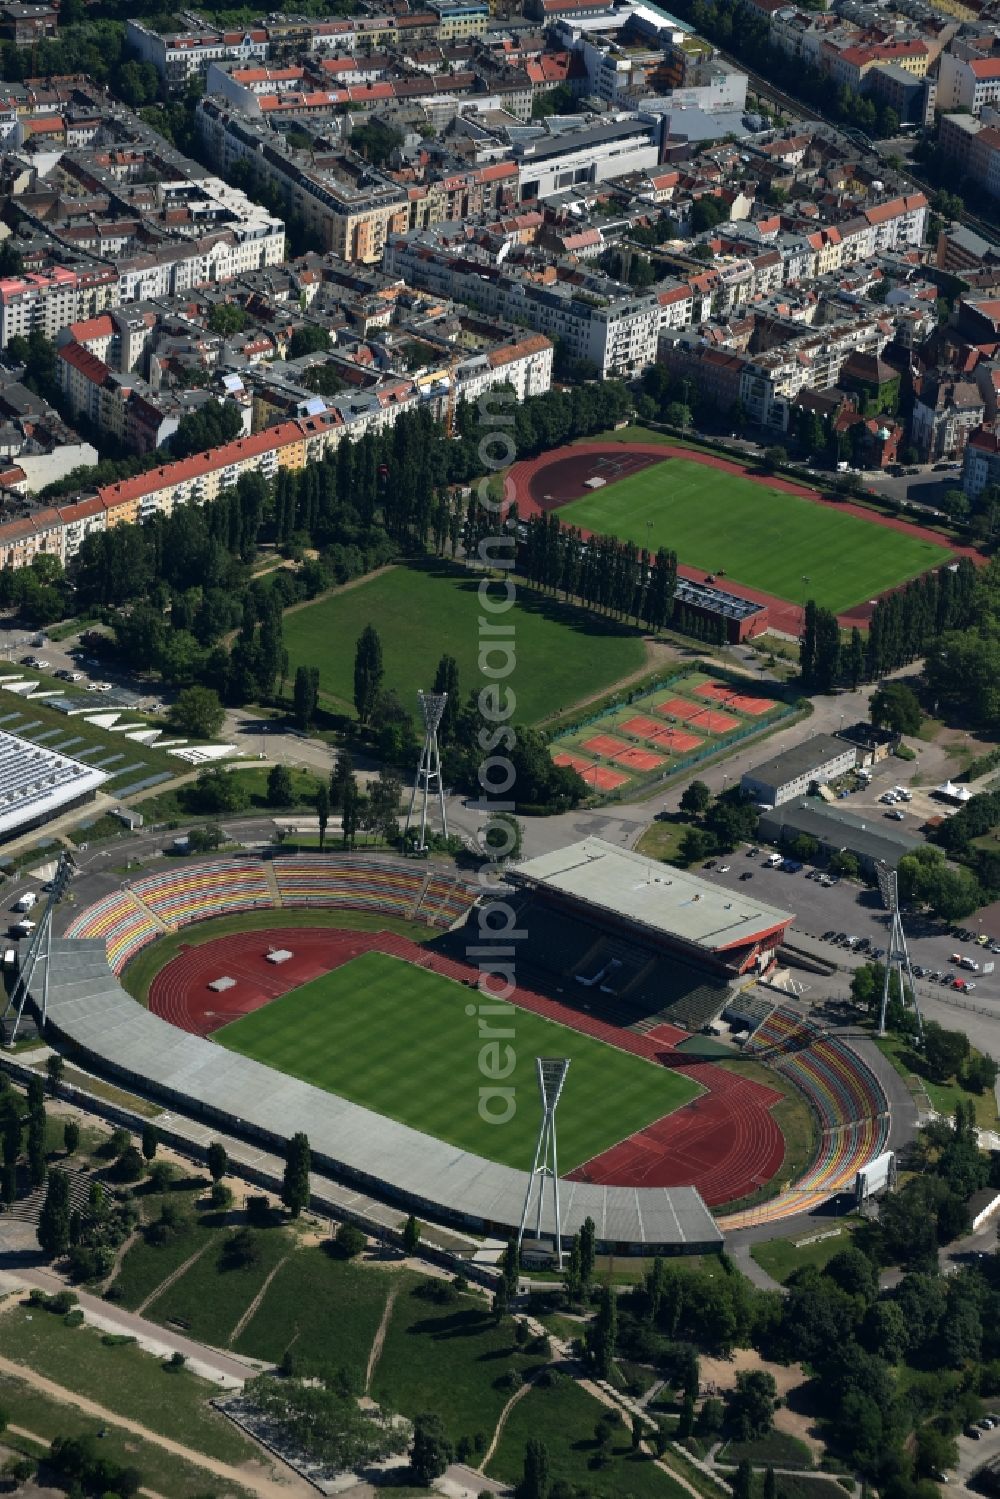 Aerial photograph Berlin - Stadium at the Friedrich-Ludwig-Jahn-Sportpark with Max-Schmeling-Halle in Berlin Prenzlauer Berg